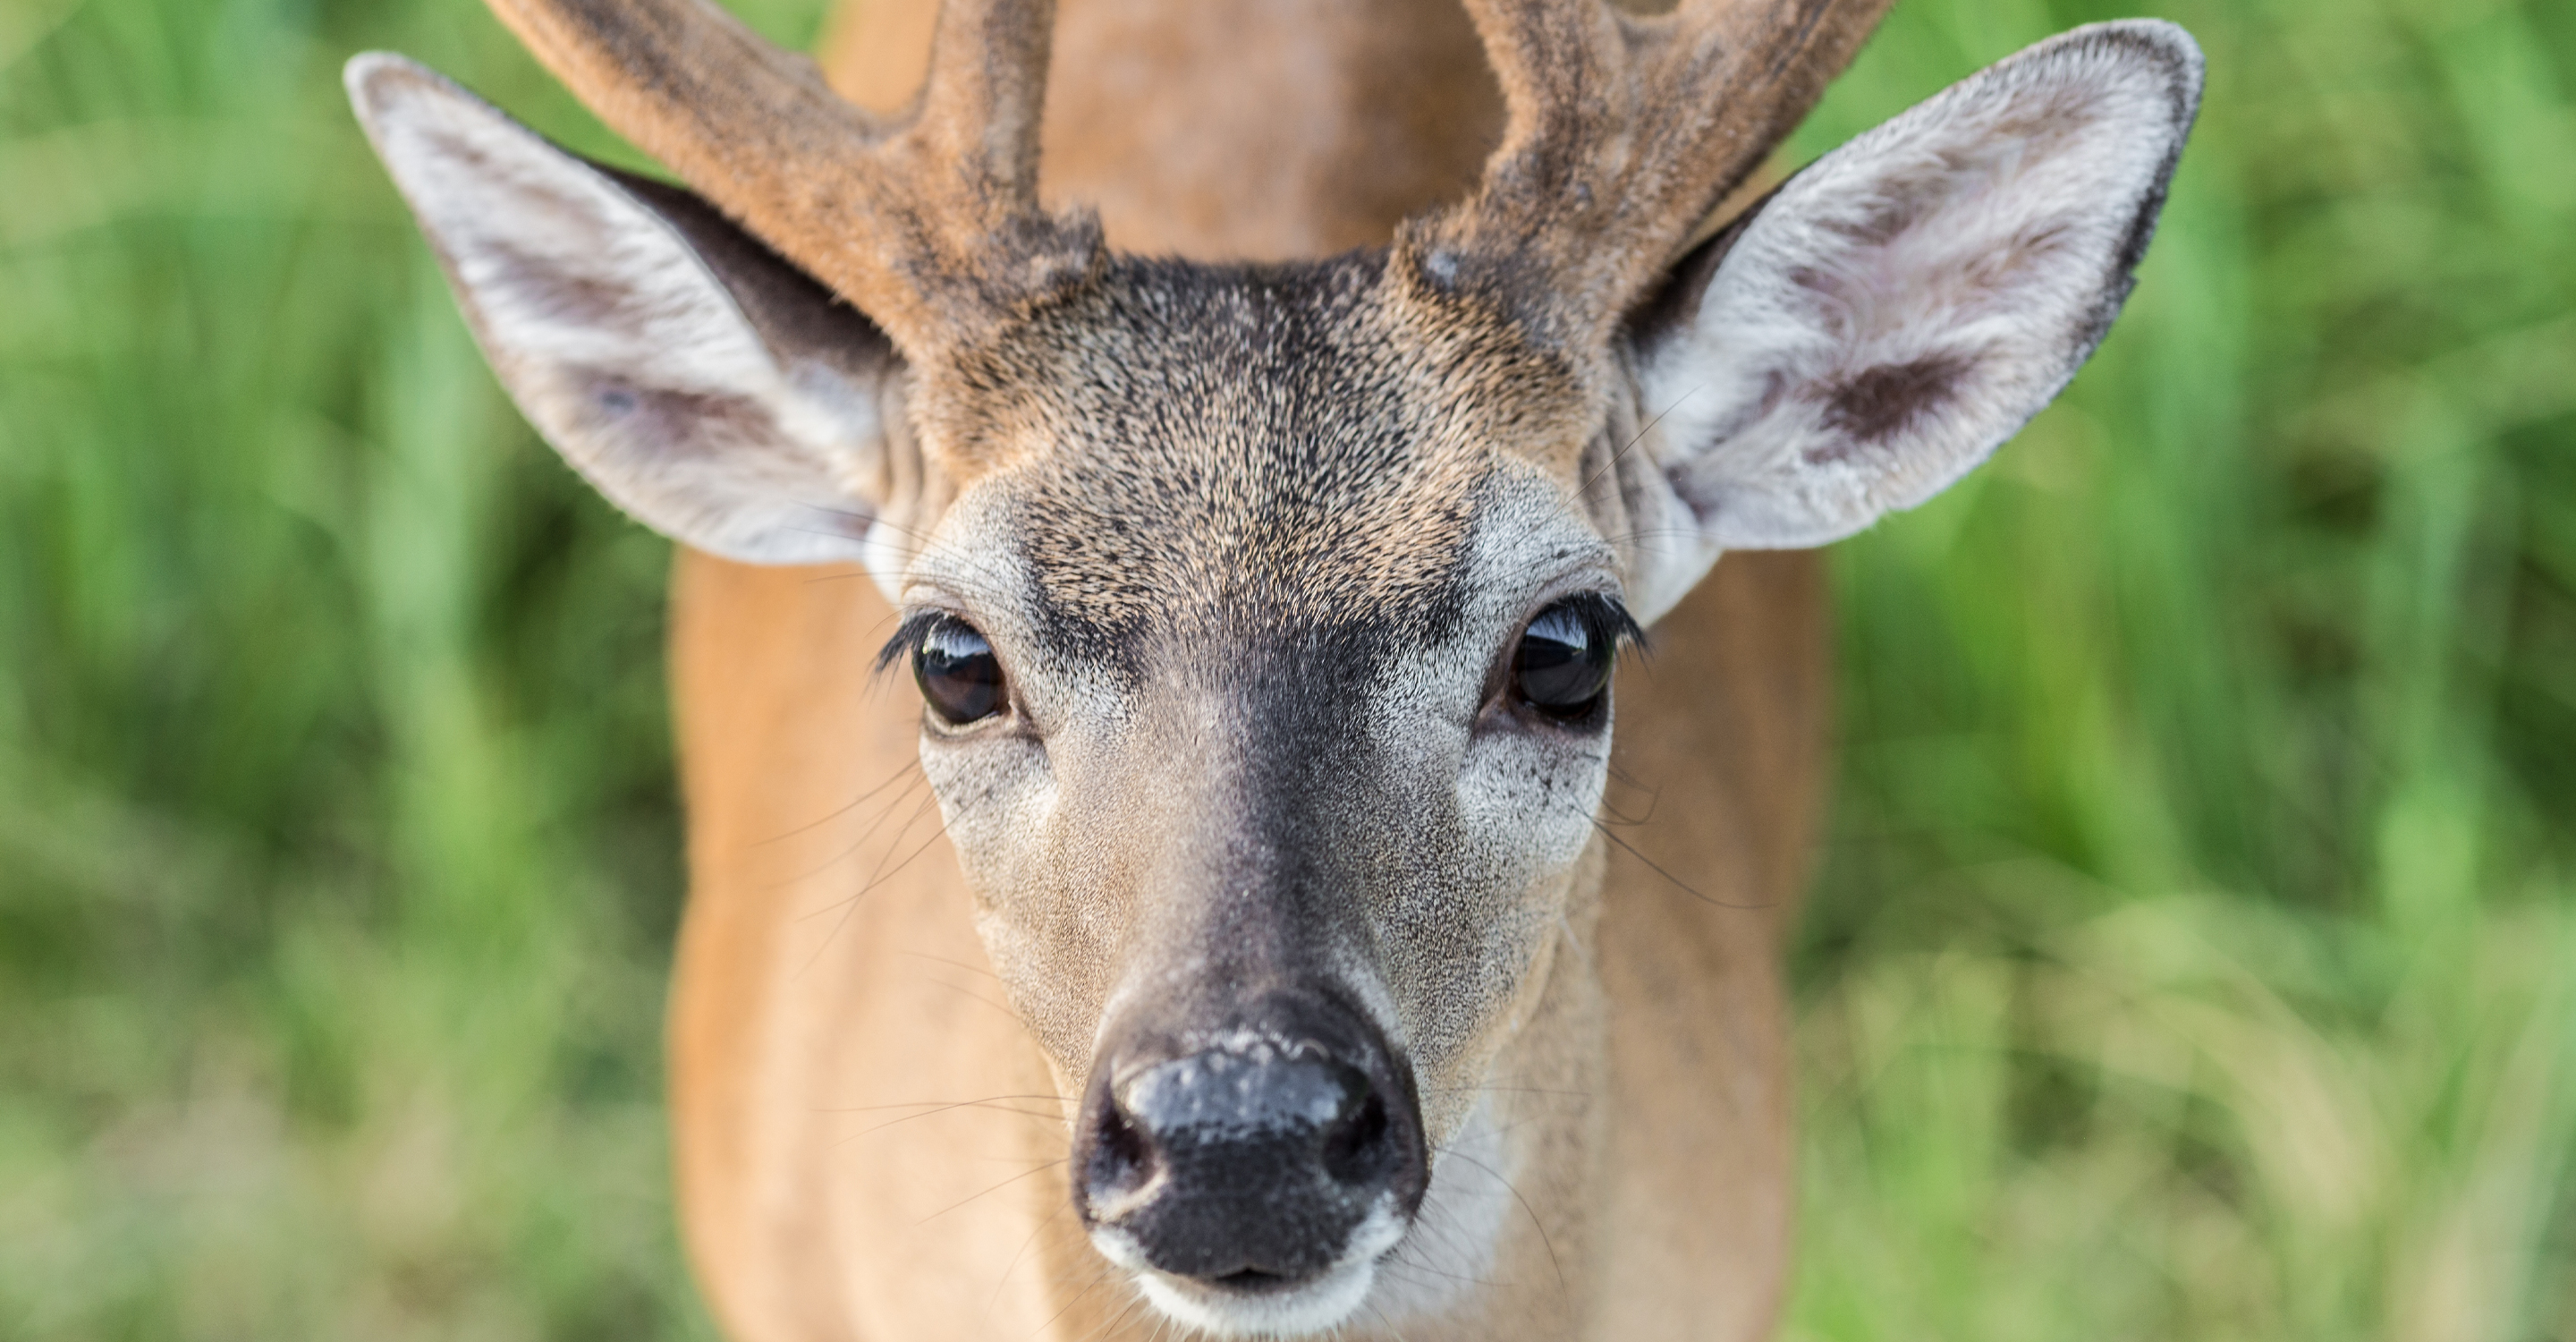 Key deer looking at camera in the National Key Deer Refuge in Key West, Florida, United States